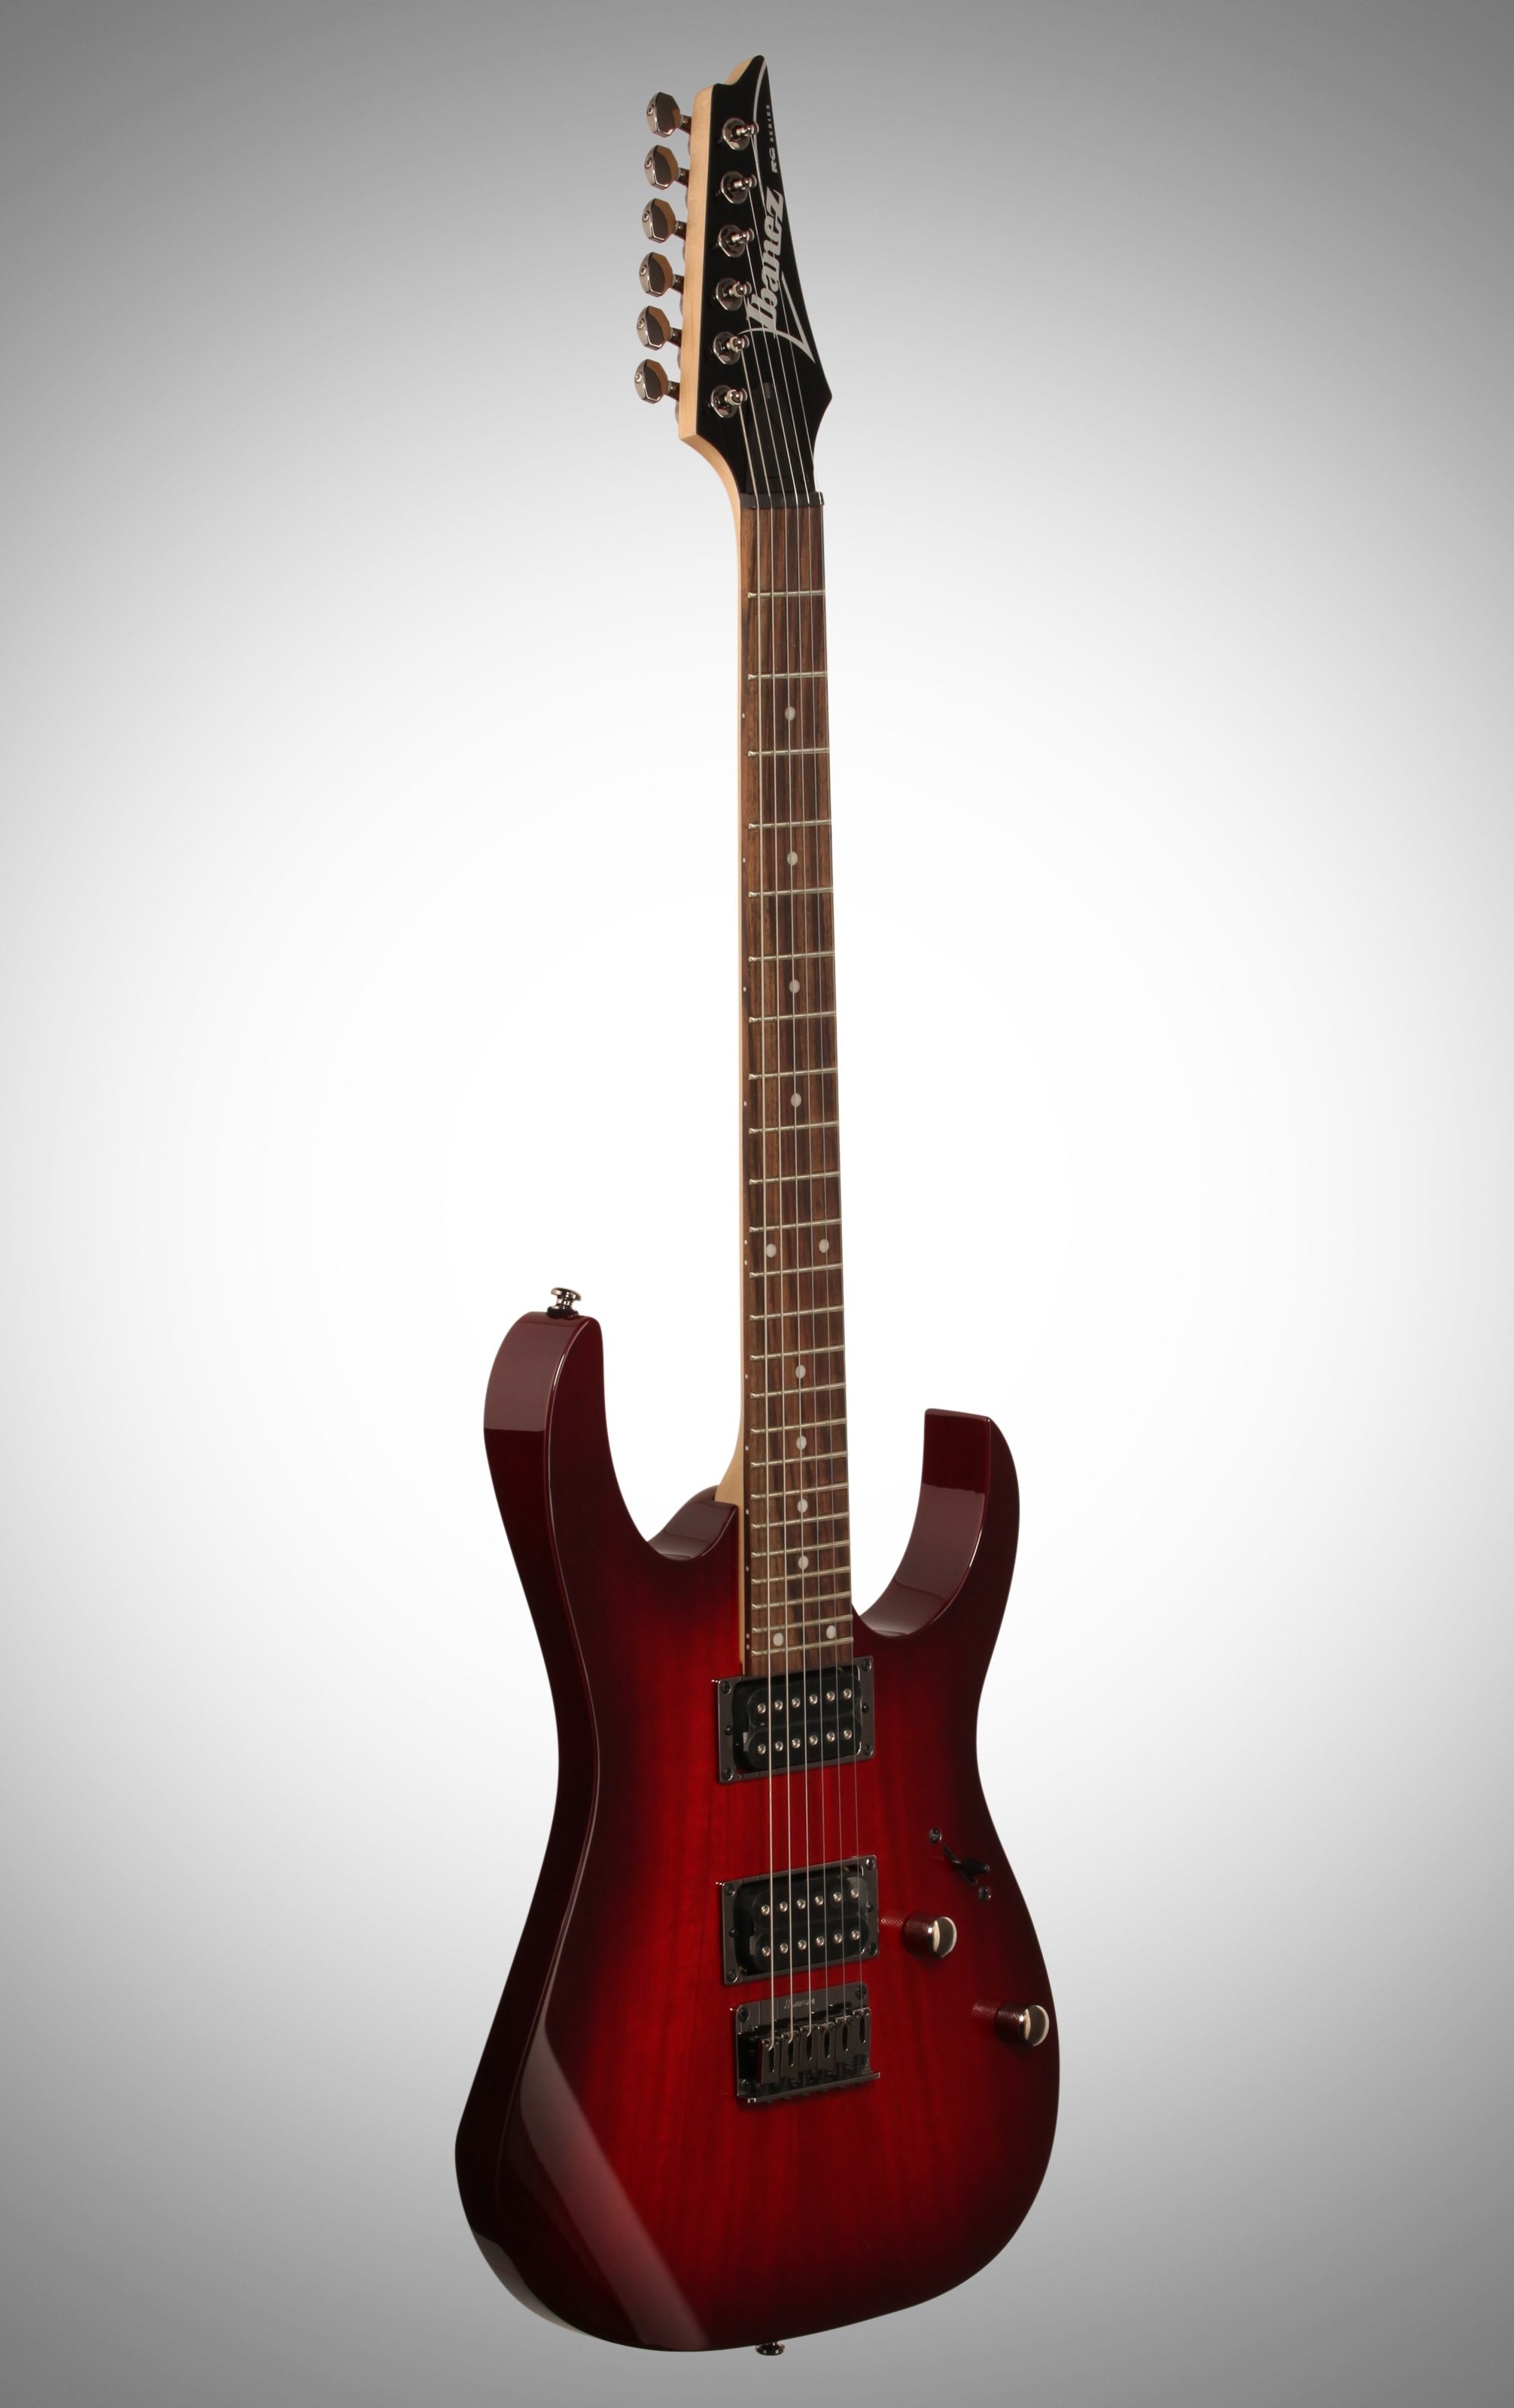 Ibanez RG421 RG Electric Guitar with Fixed Bridge, Blackberry Sunburst